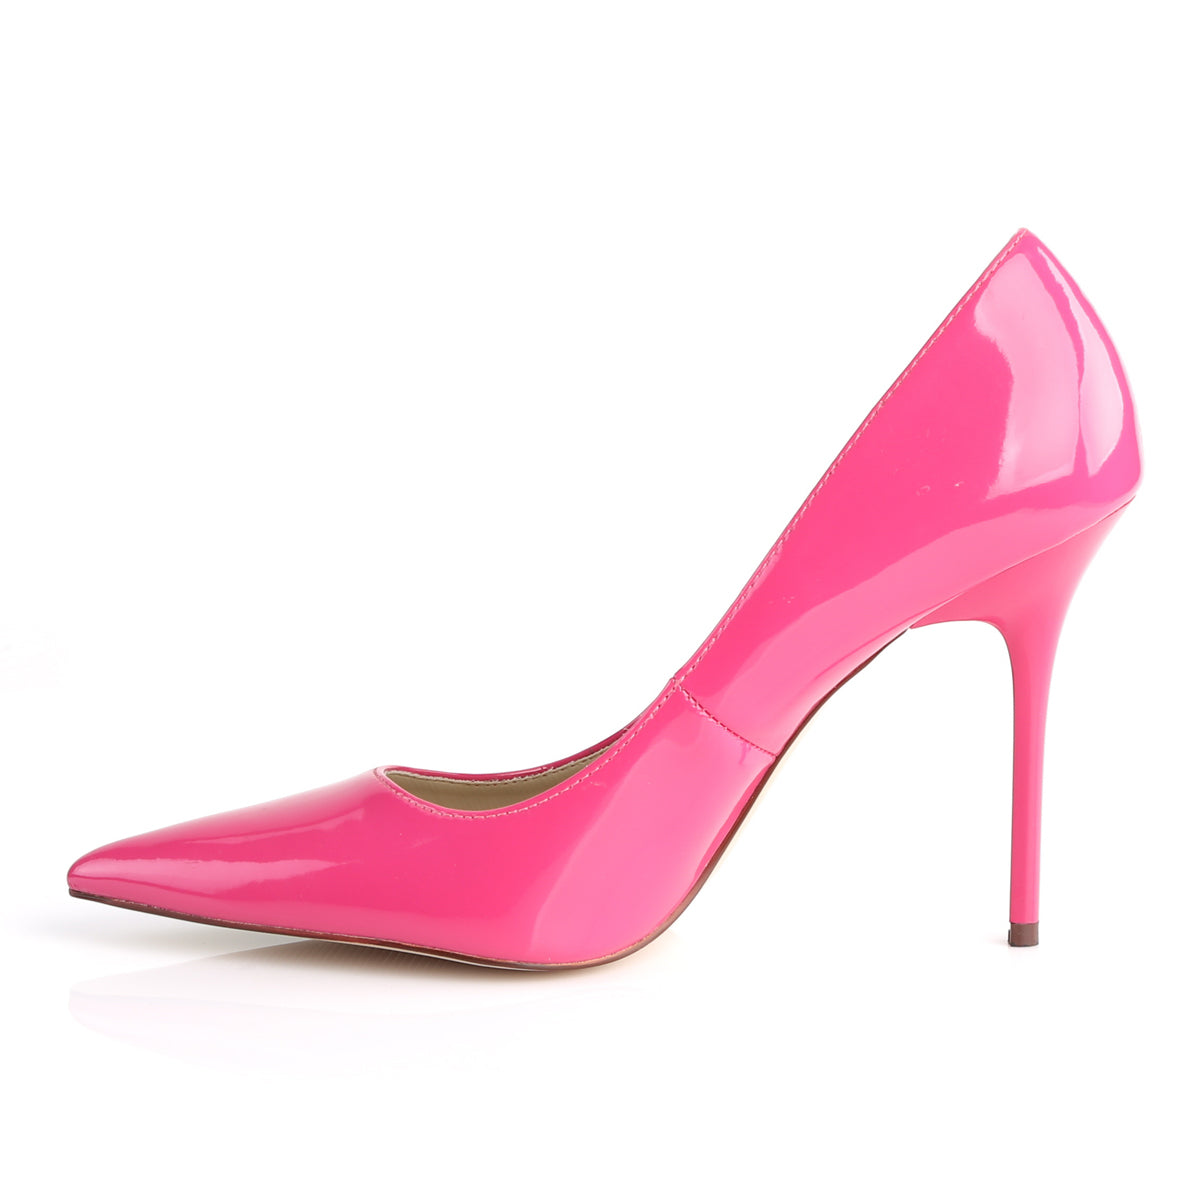 CLASSIQUE-20 Pleaser 4" Heel Hot Pink Patent Fetish Footwear-Pleaser- Sexy Shoes Pole Dance Heels